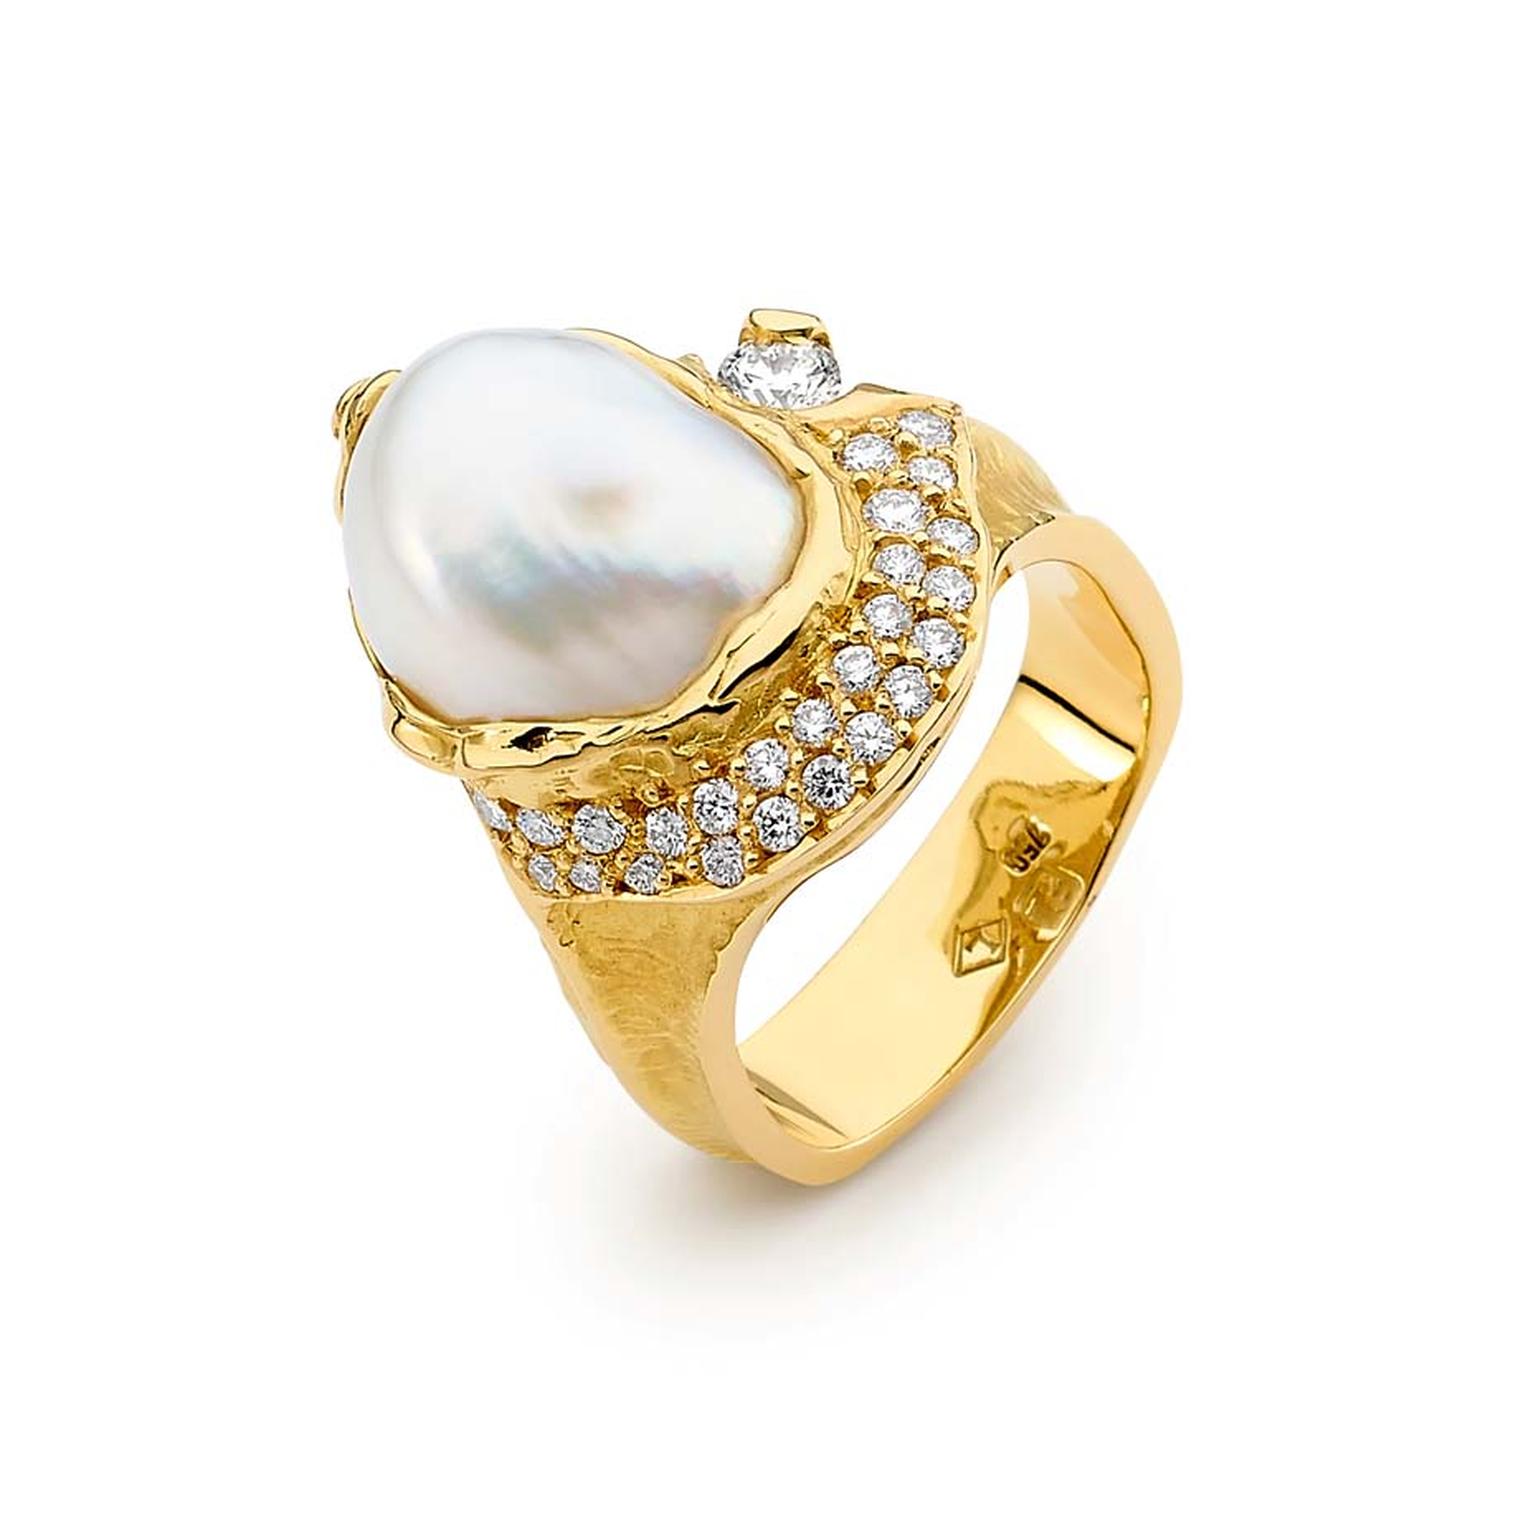 Australian Pearls_Linneys_18ct yellow gold Australian South Sea seedless pearl and diamond ring $7900.jpg